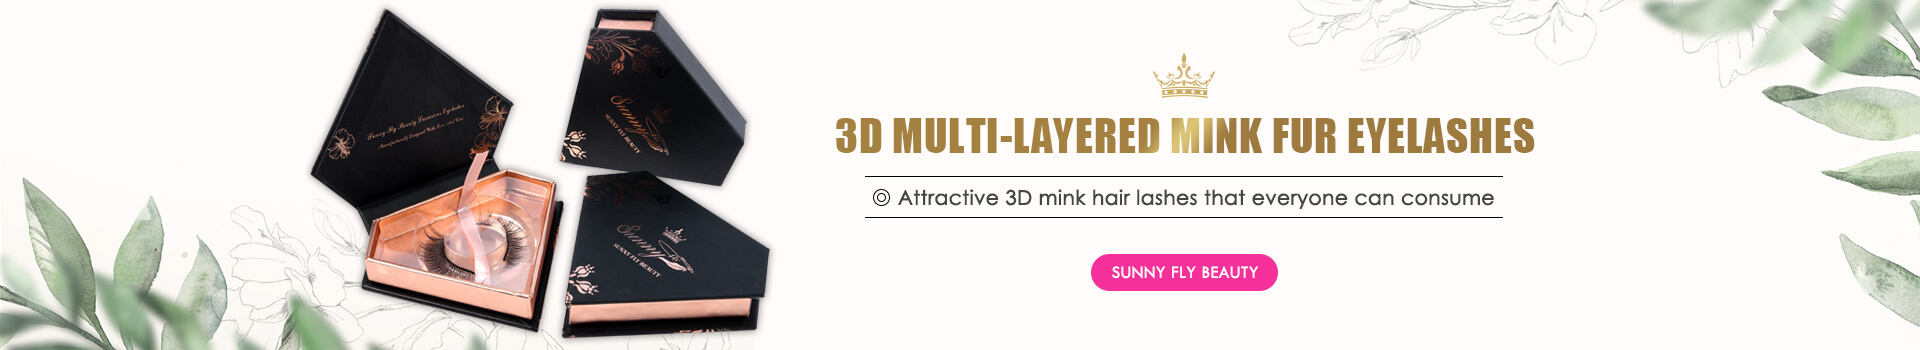 3D Multi-layered Mink Fur Eyelashes MG13